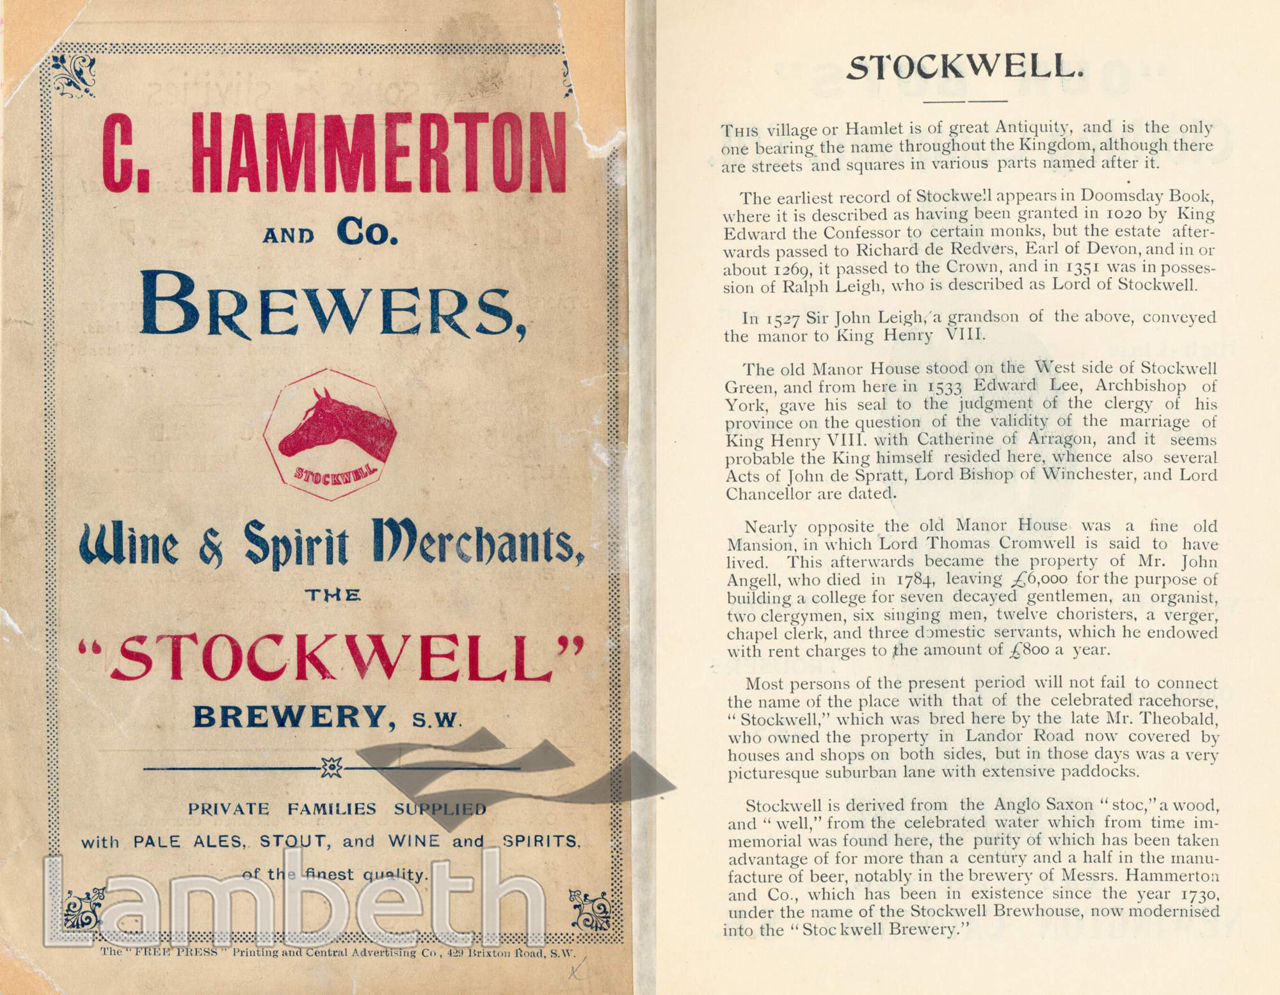 HAMMERTON & CO., BREWERY, STOCKWELL: ADVERTISEMENT